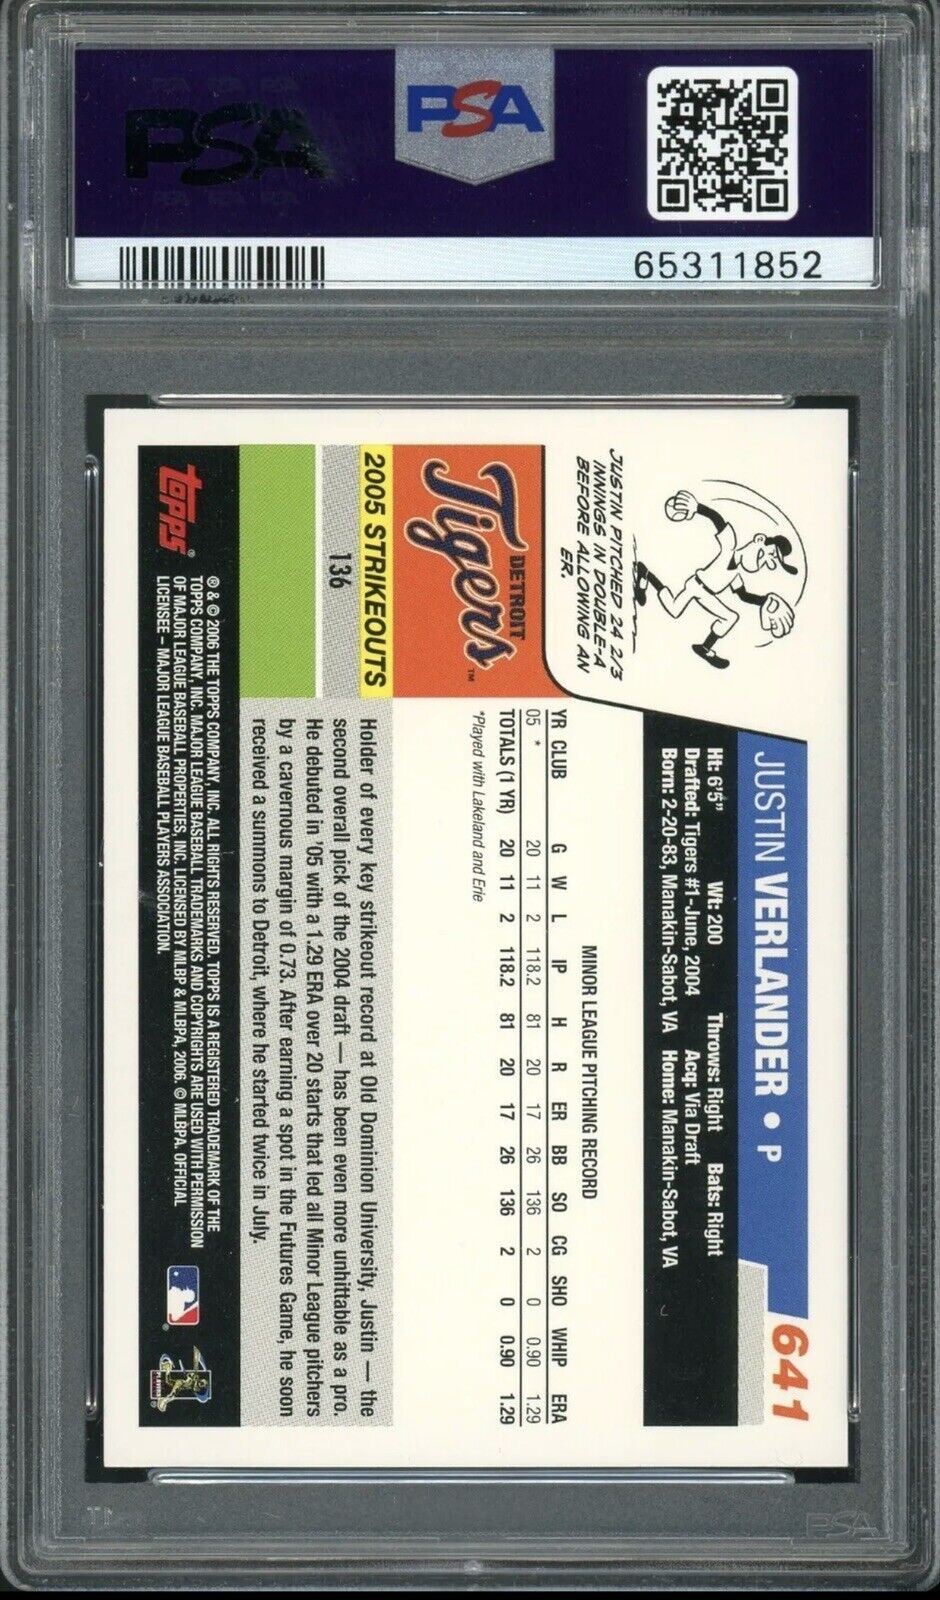 2006 Topps Justin Verlander #641 Rookie Card RC PSA 9 - 65311852 Tigers Astros P